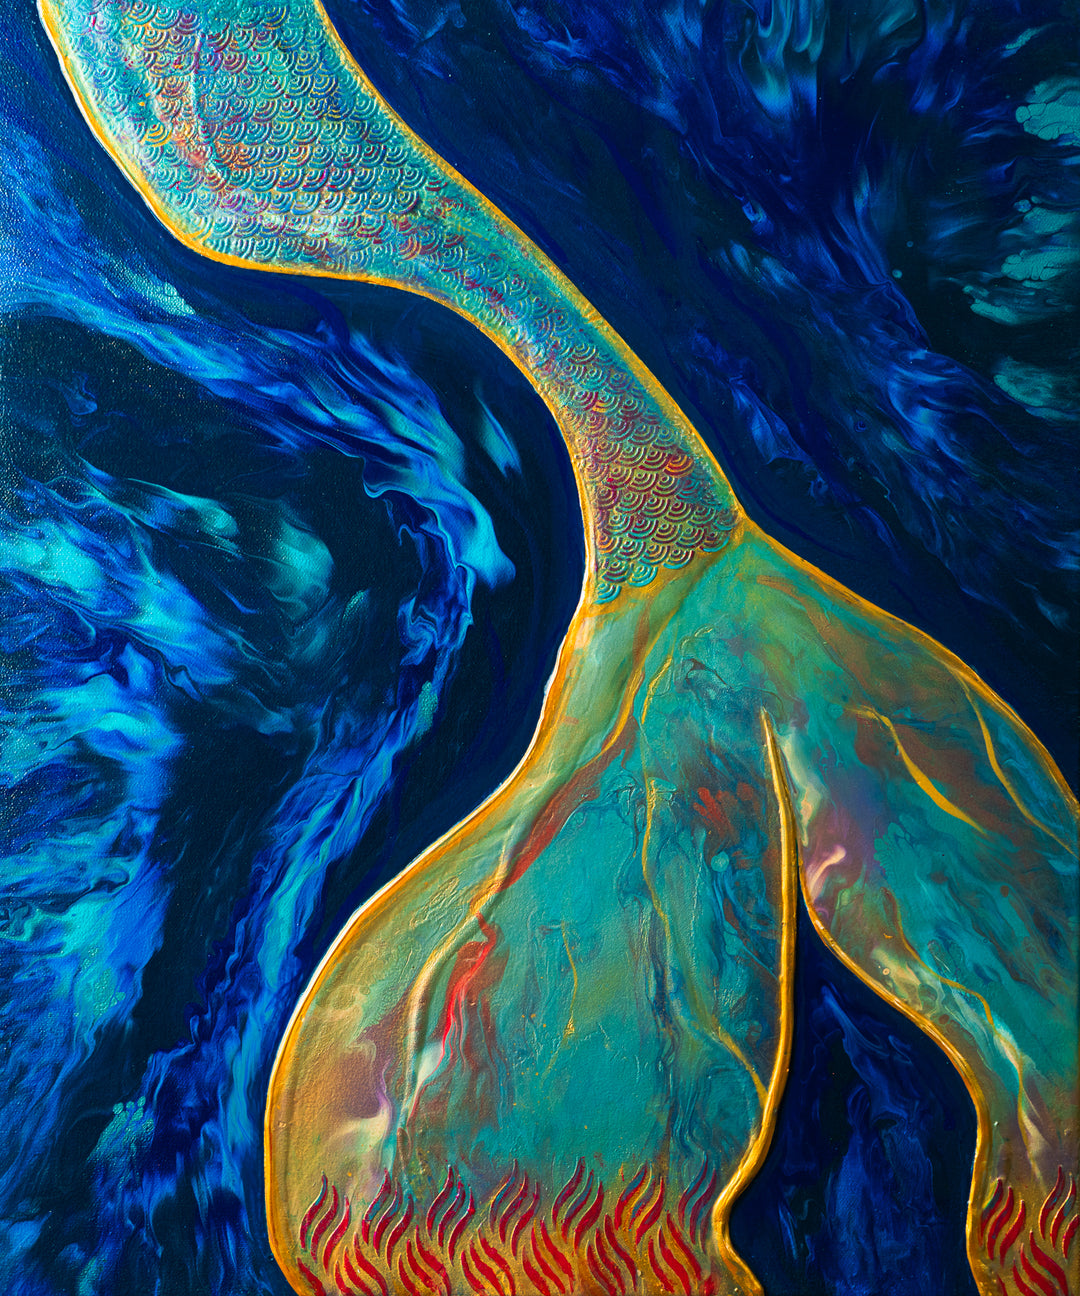 Mystique of the Mermaid: Azure Dreams - 20"x24" - SOLD